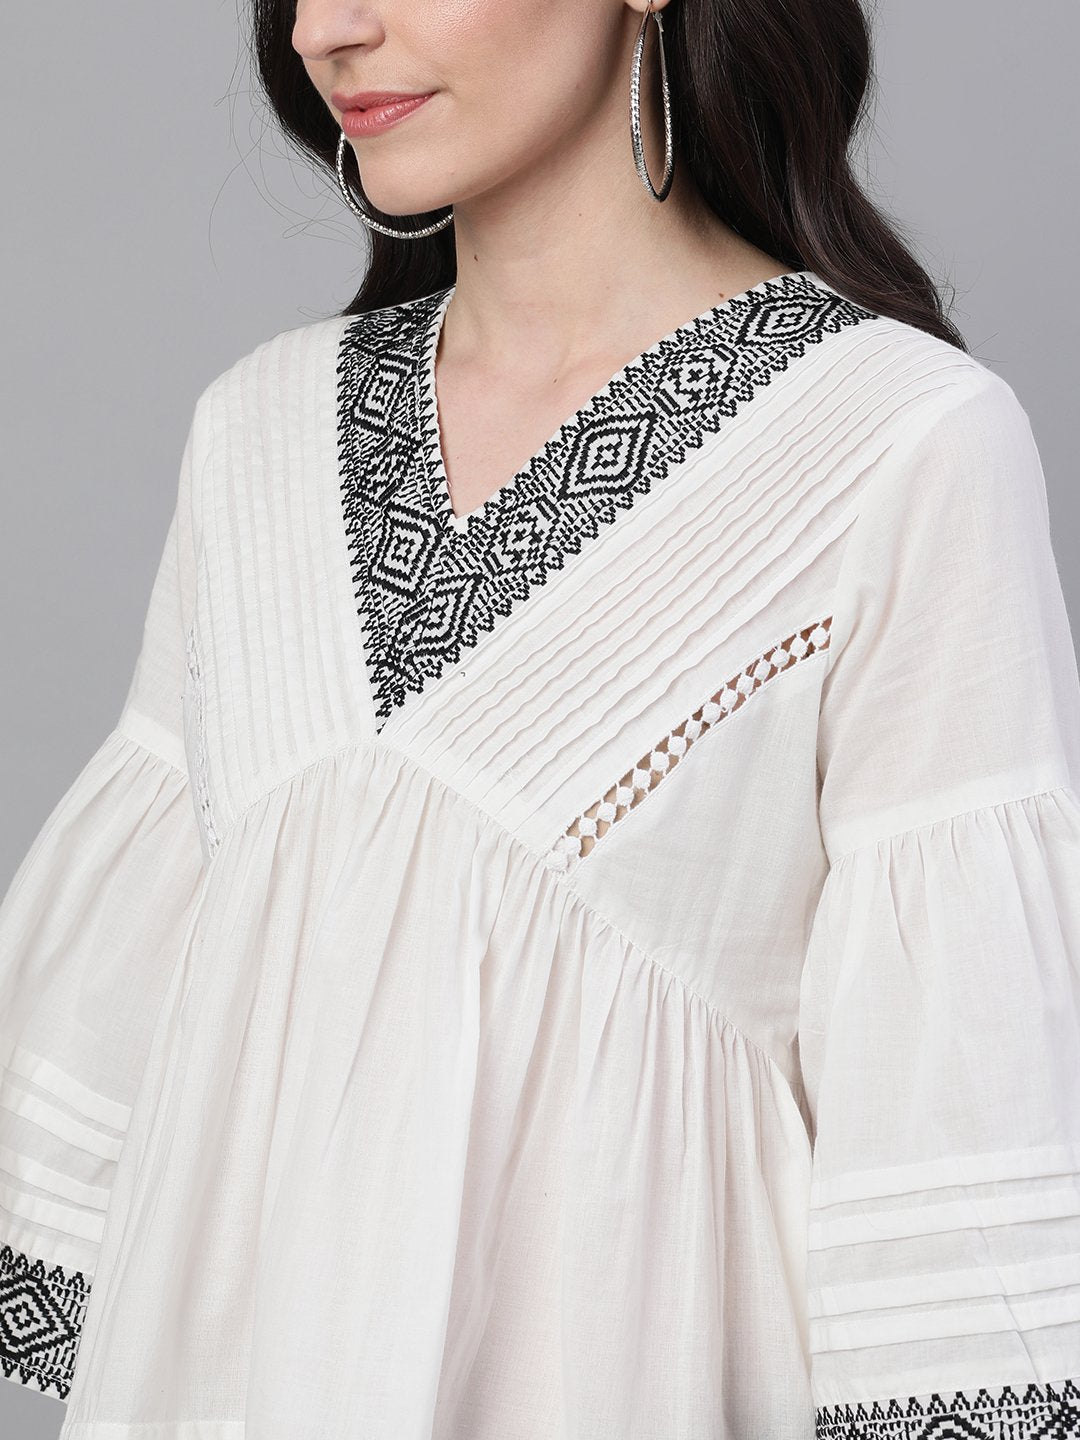 Ishin Women's Cotton White Embroidered Top